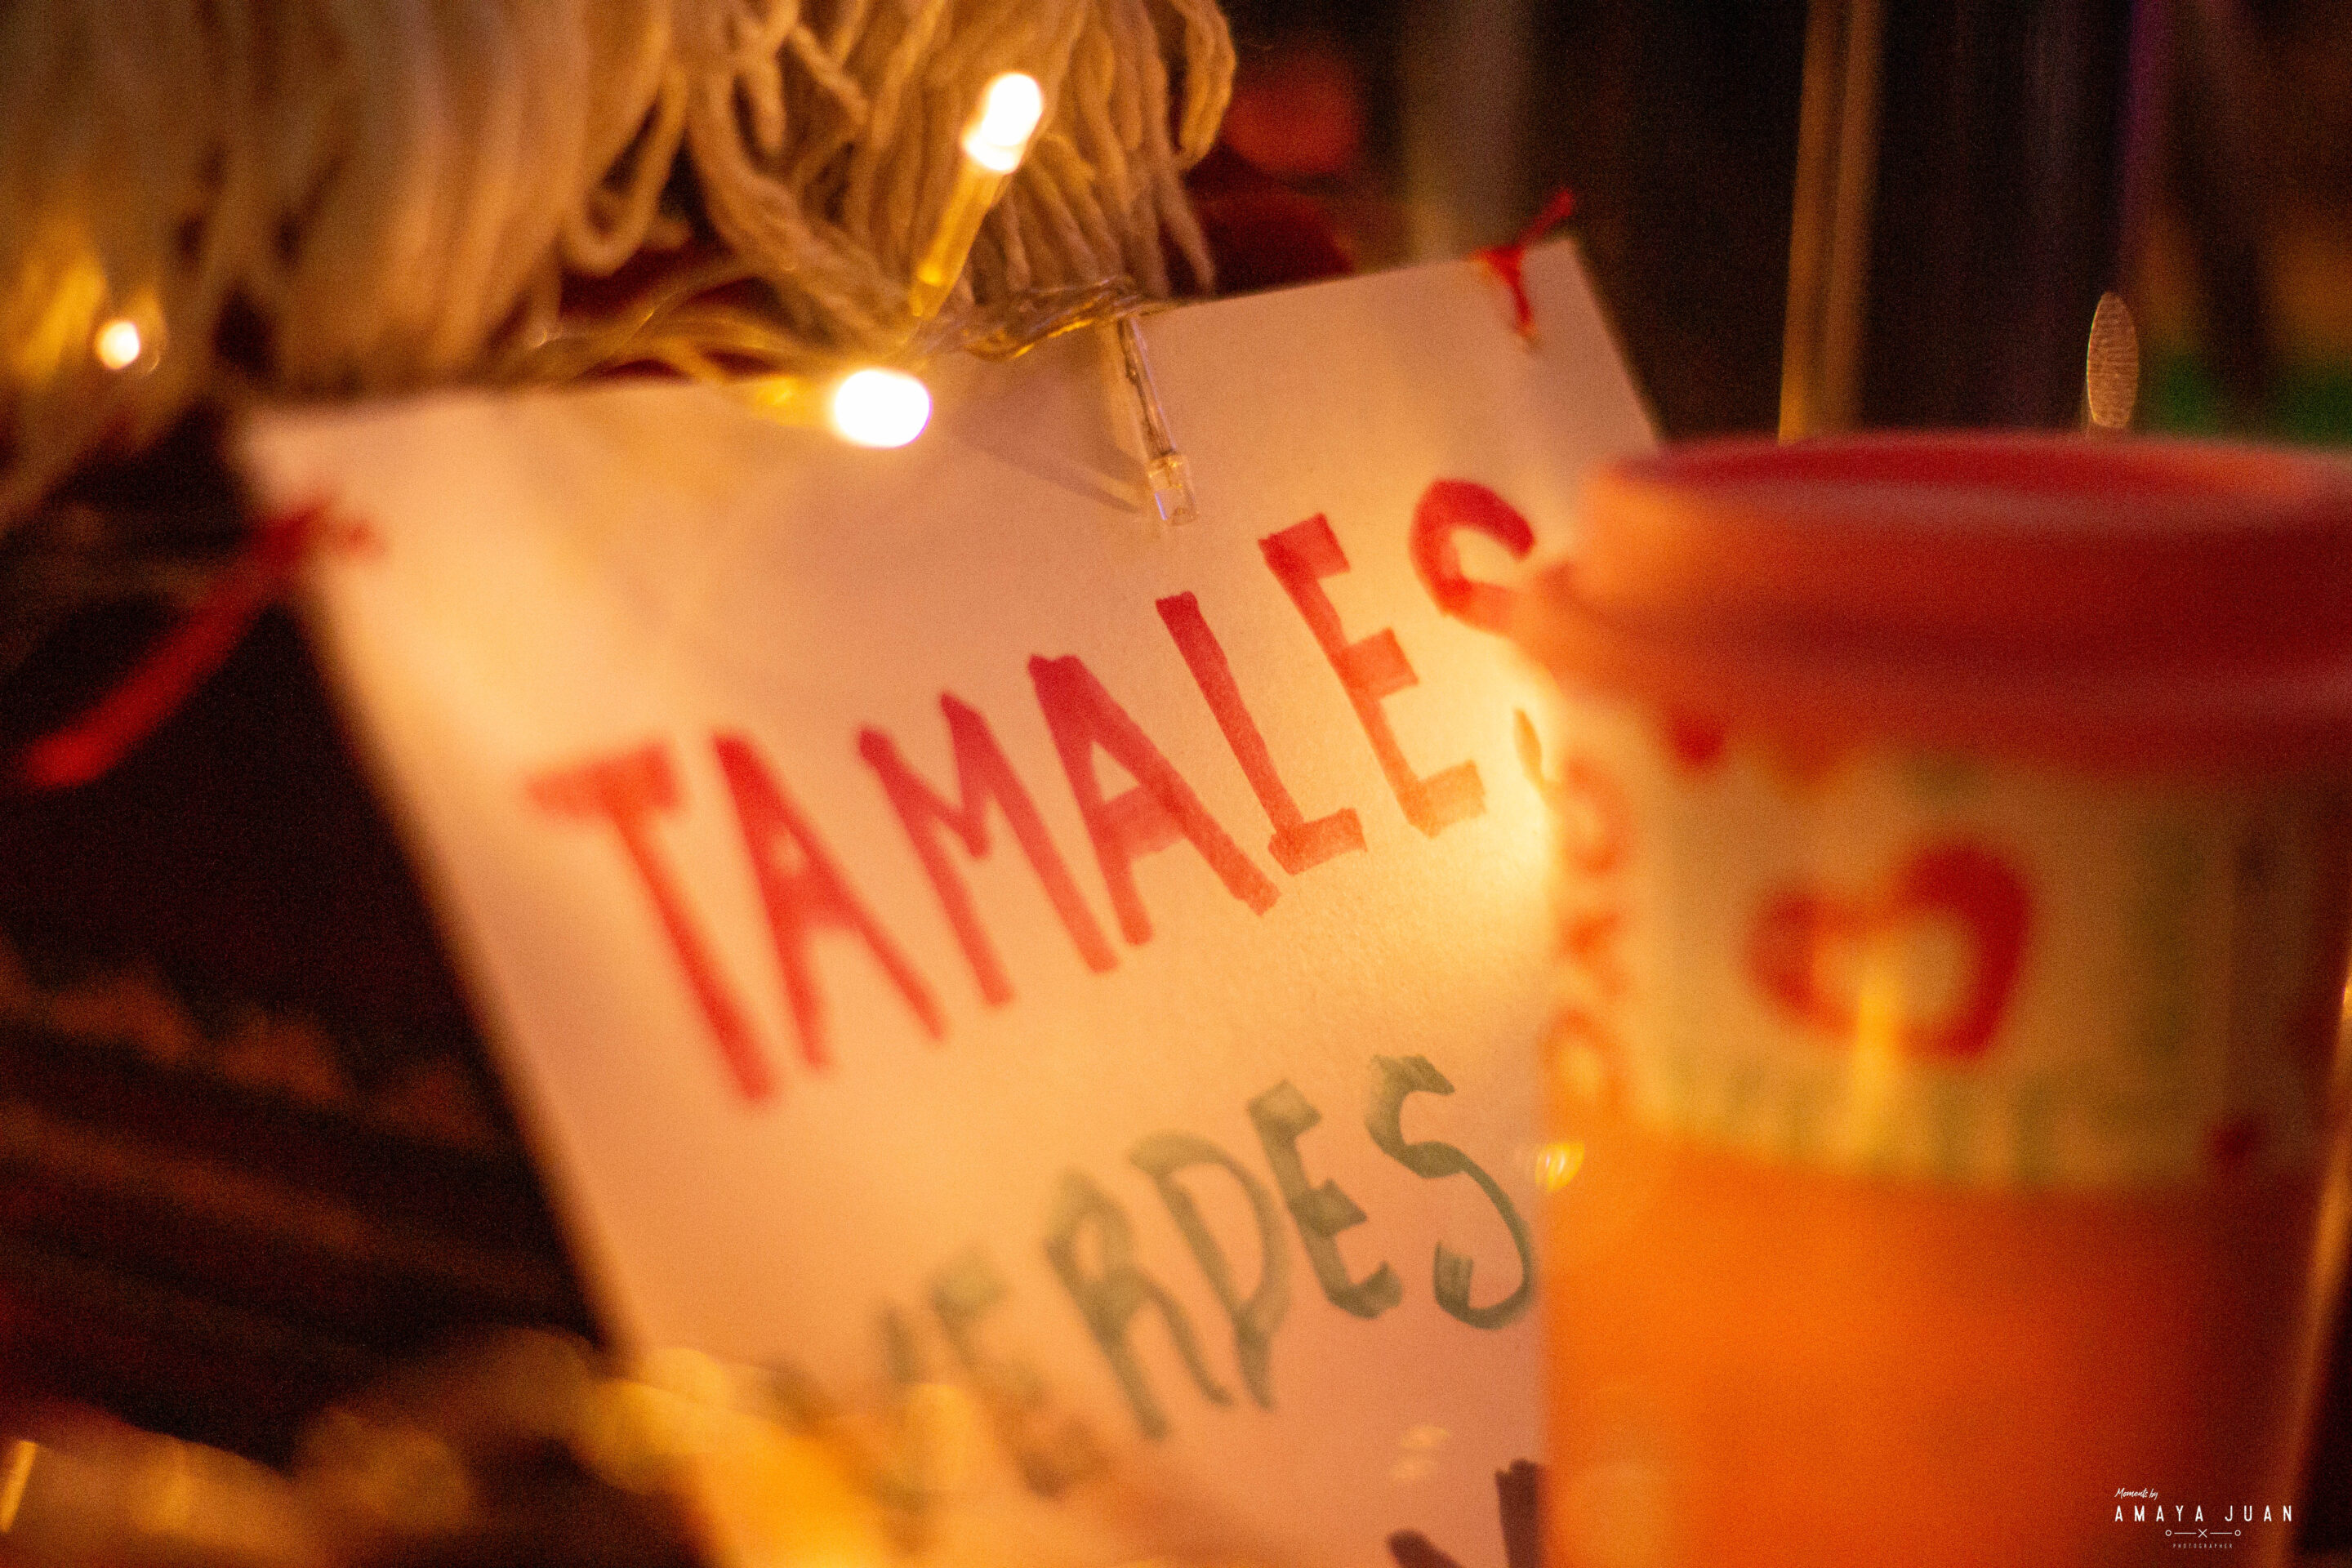 A sign saying "Tamales verdes" or "Green Tamales" at the El Telar Posada event.